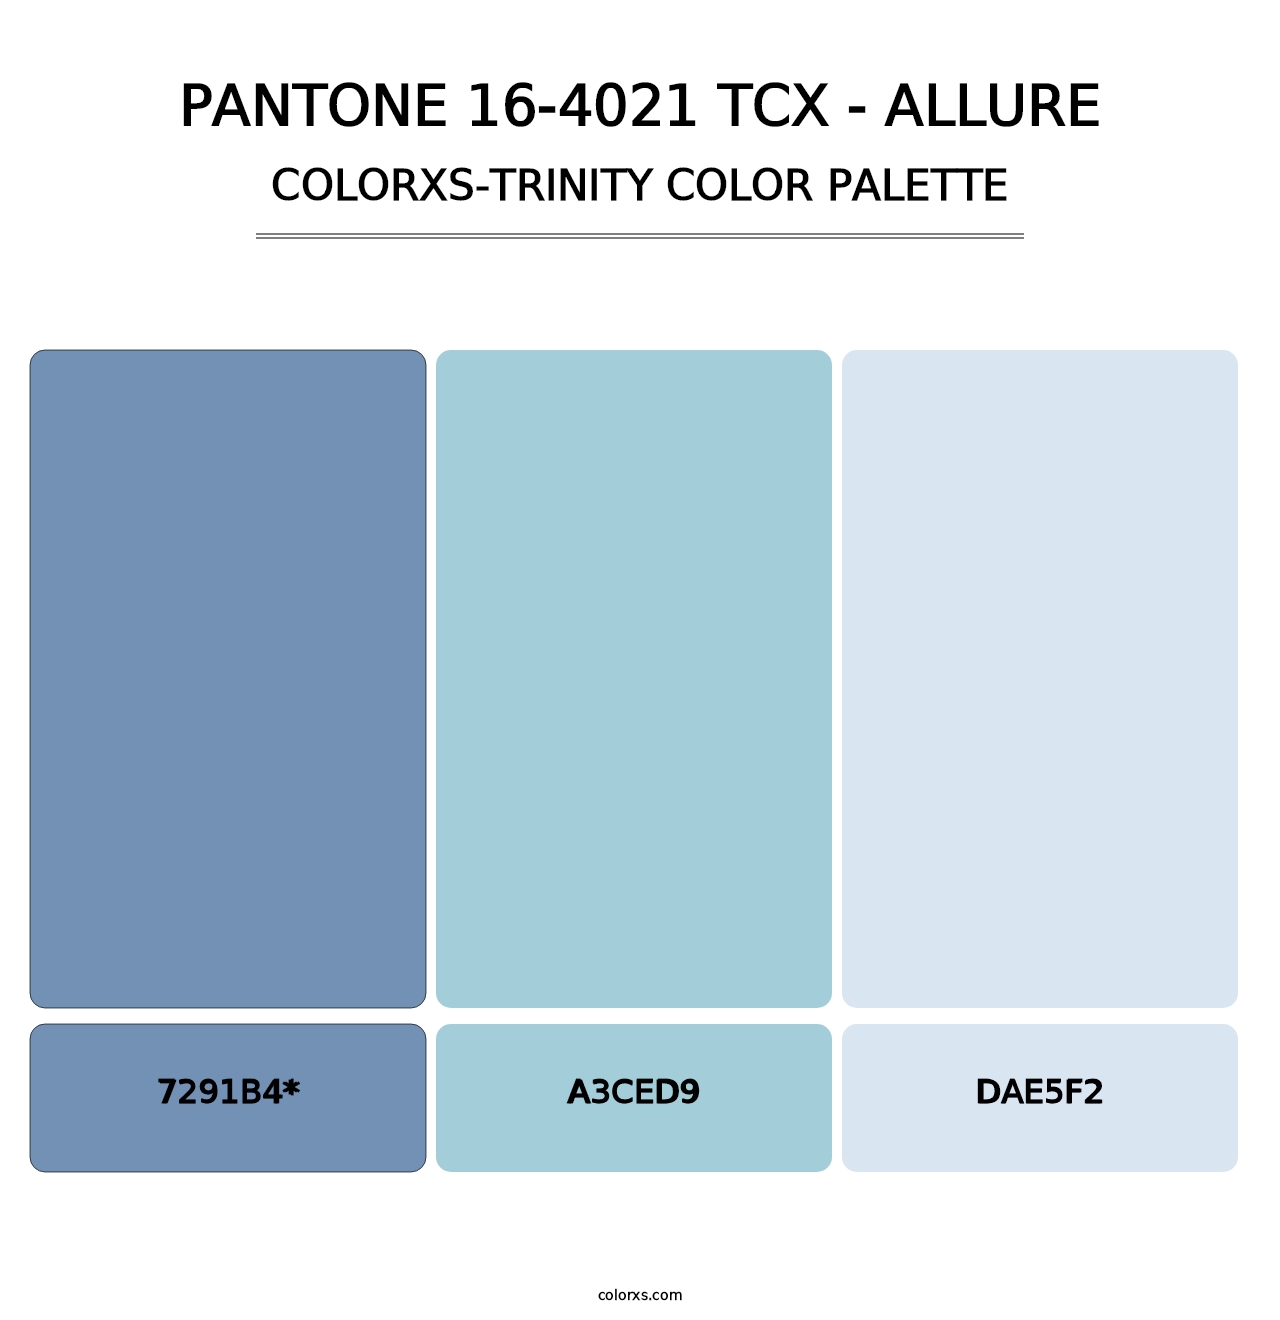 PANTONE 16-4021 TCX - Allure - Colorxs Trinity Palette